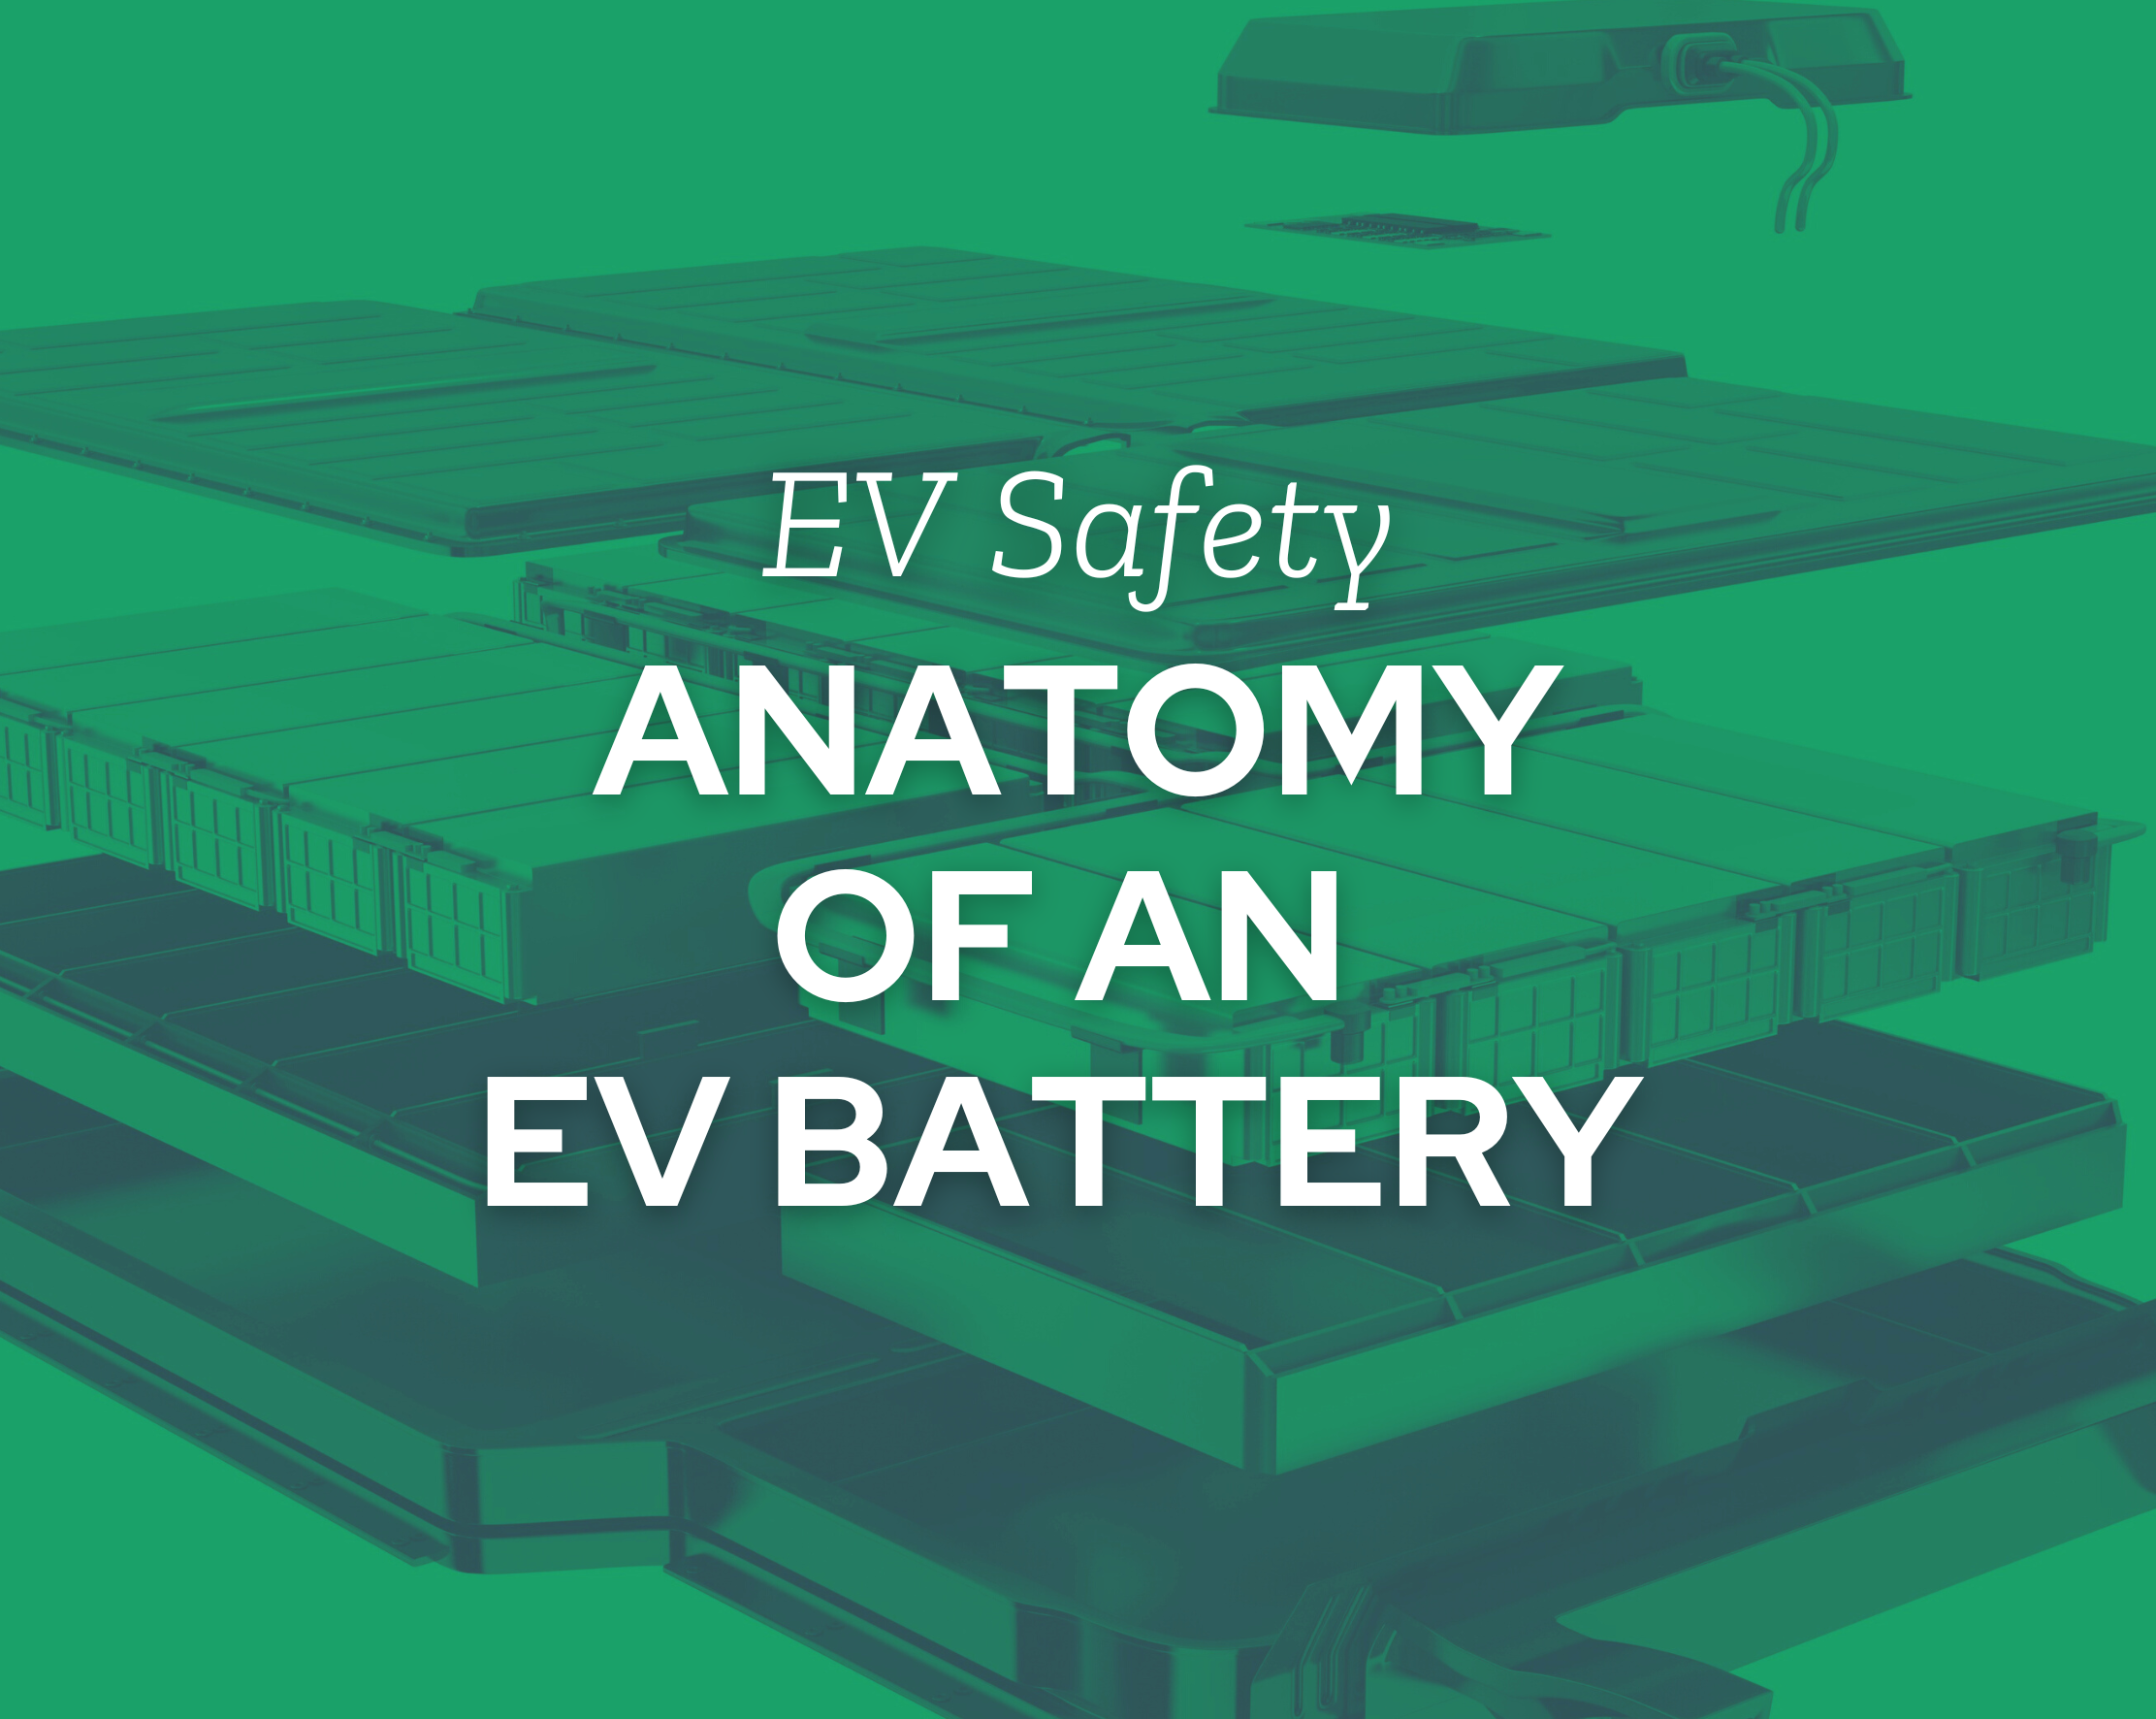 Anatomy of an EV Battery